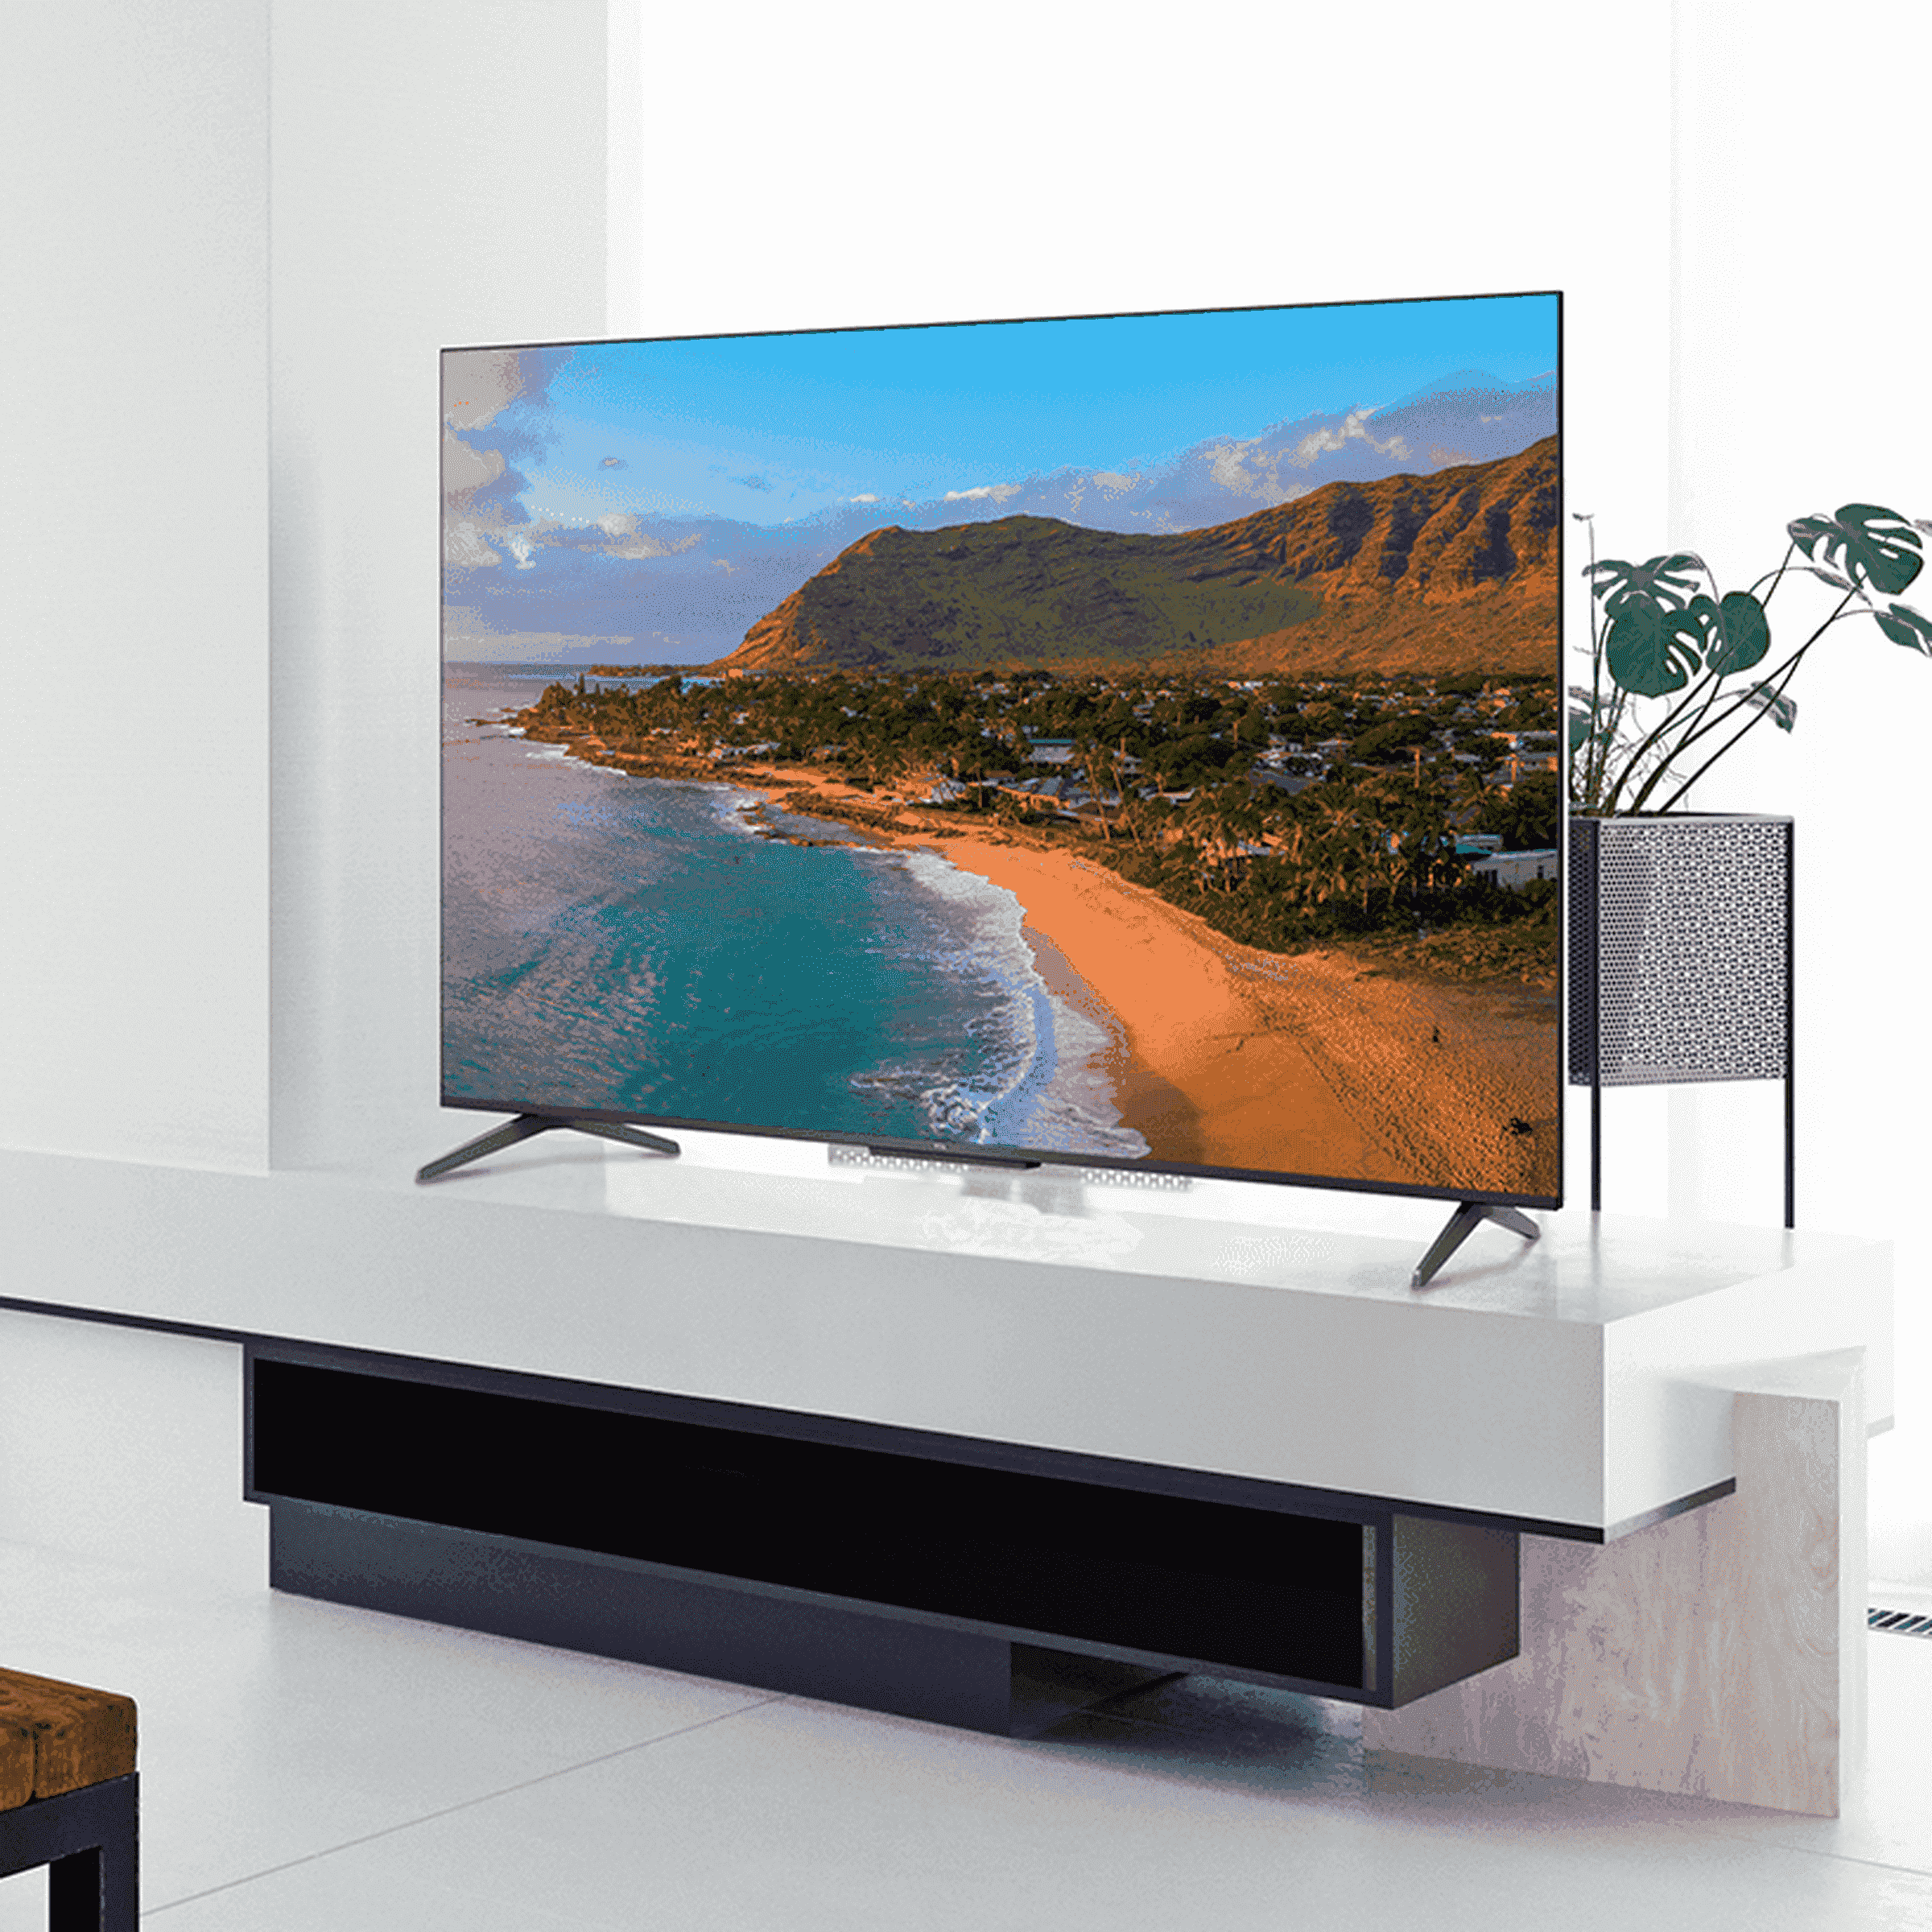 65 inç TCL 5 Serisi QLED TV'nin oturma odasında çekilmiş bir yaşam tarzı görüntüsü.